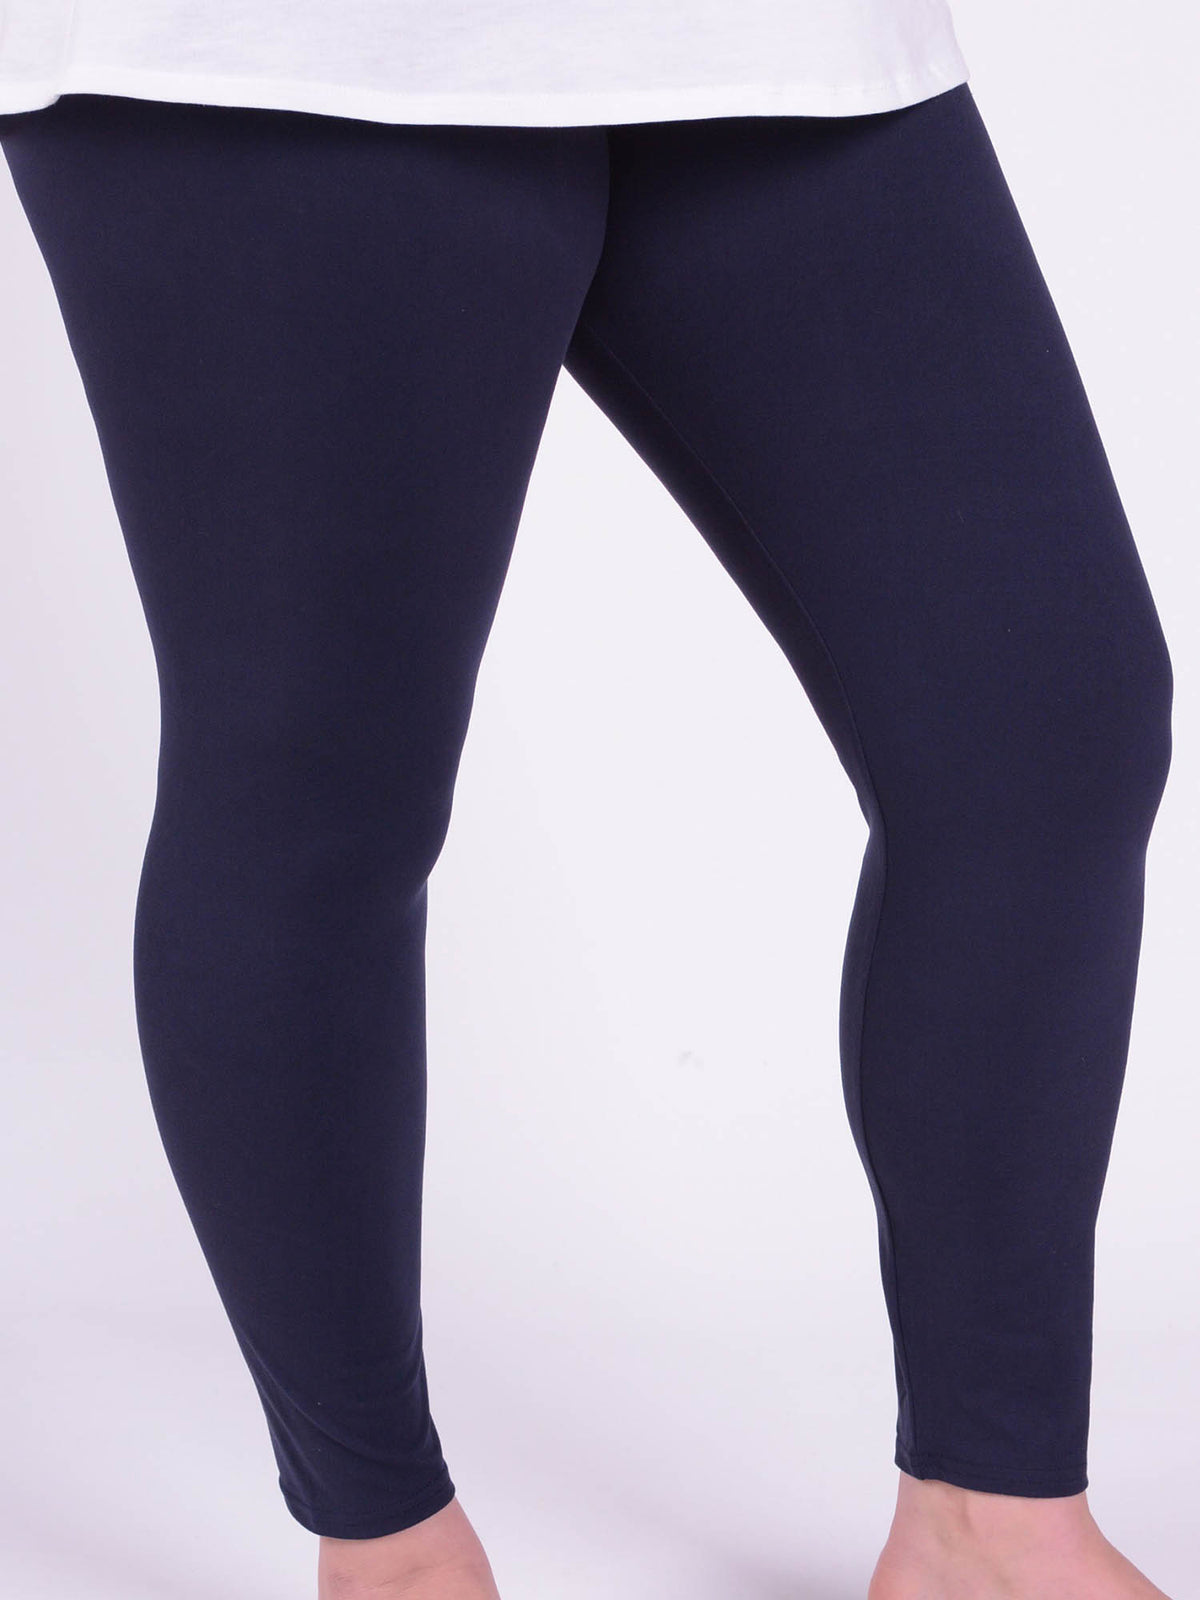 Leggings  - Plain Navy Blue - L61, Trousers, Pure Plus Clothing, Lagenlook Clothing, Plus Size Fashion, Over 50 Fashion